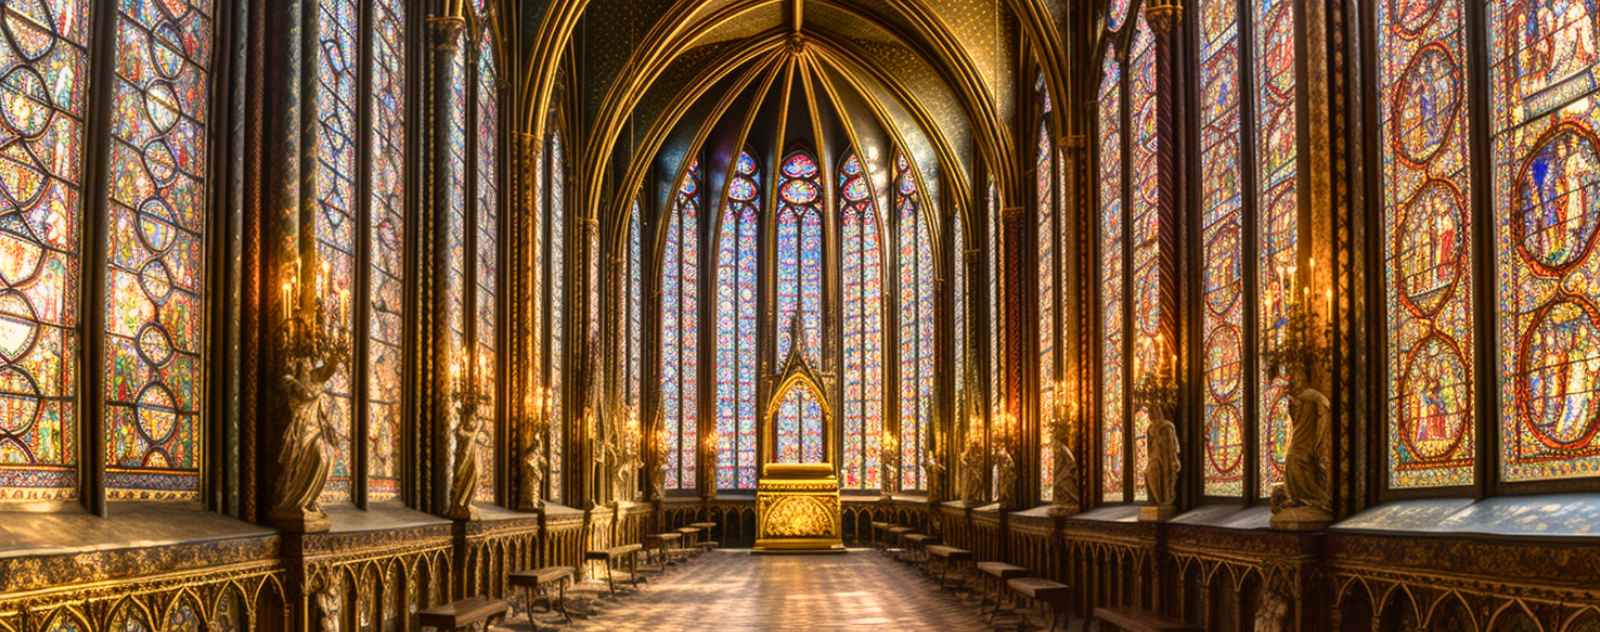 vitraux art gothique flamboyant